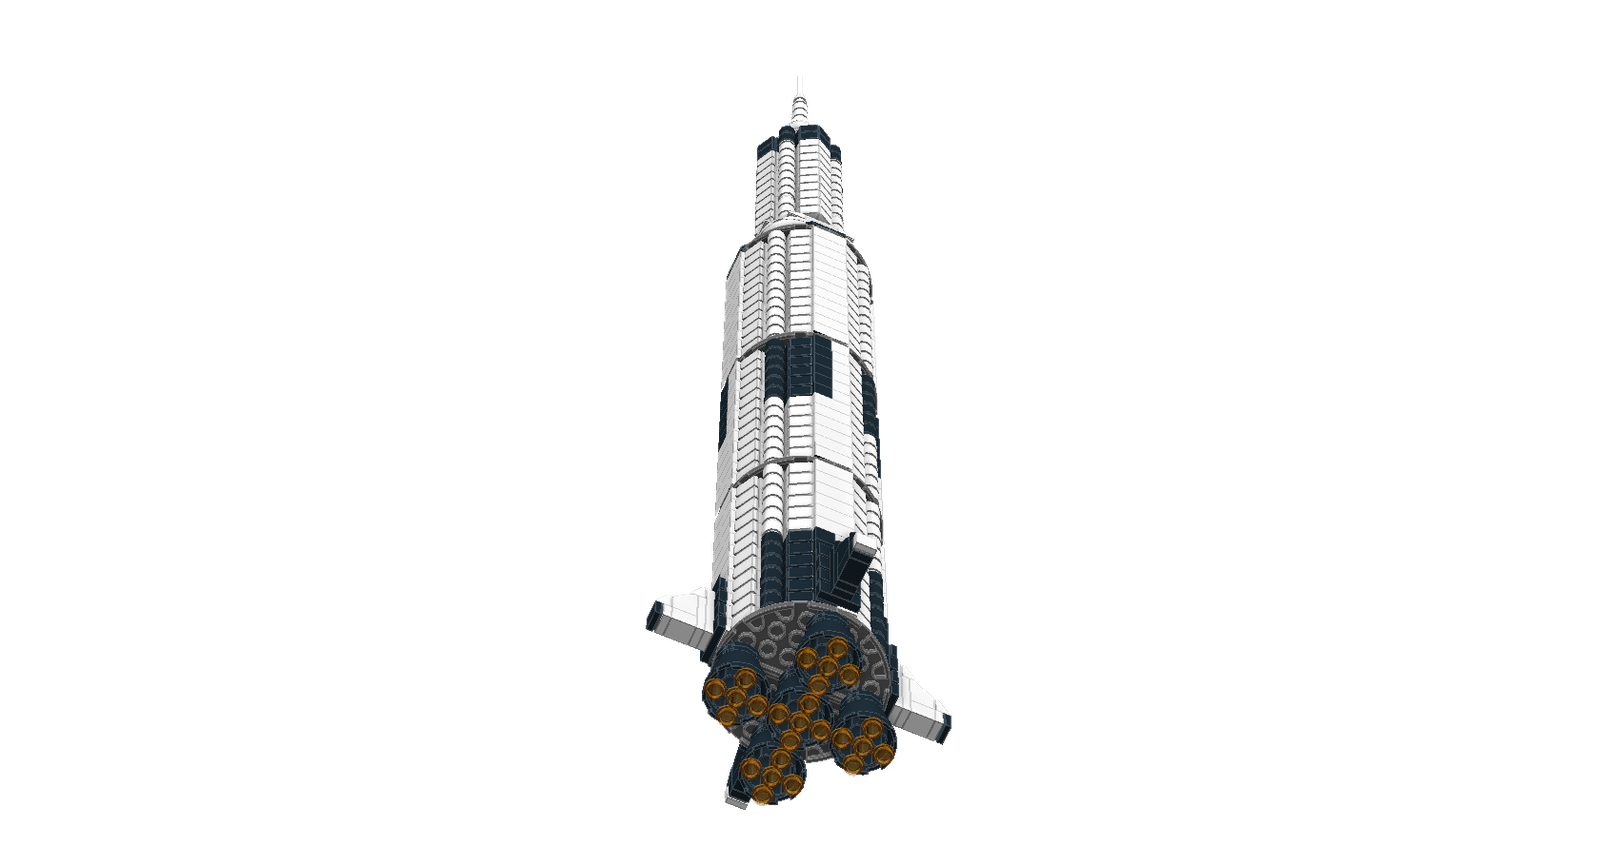 Lego ideas product saturn. Clipart rocket apollo 11